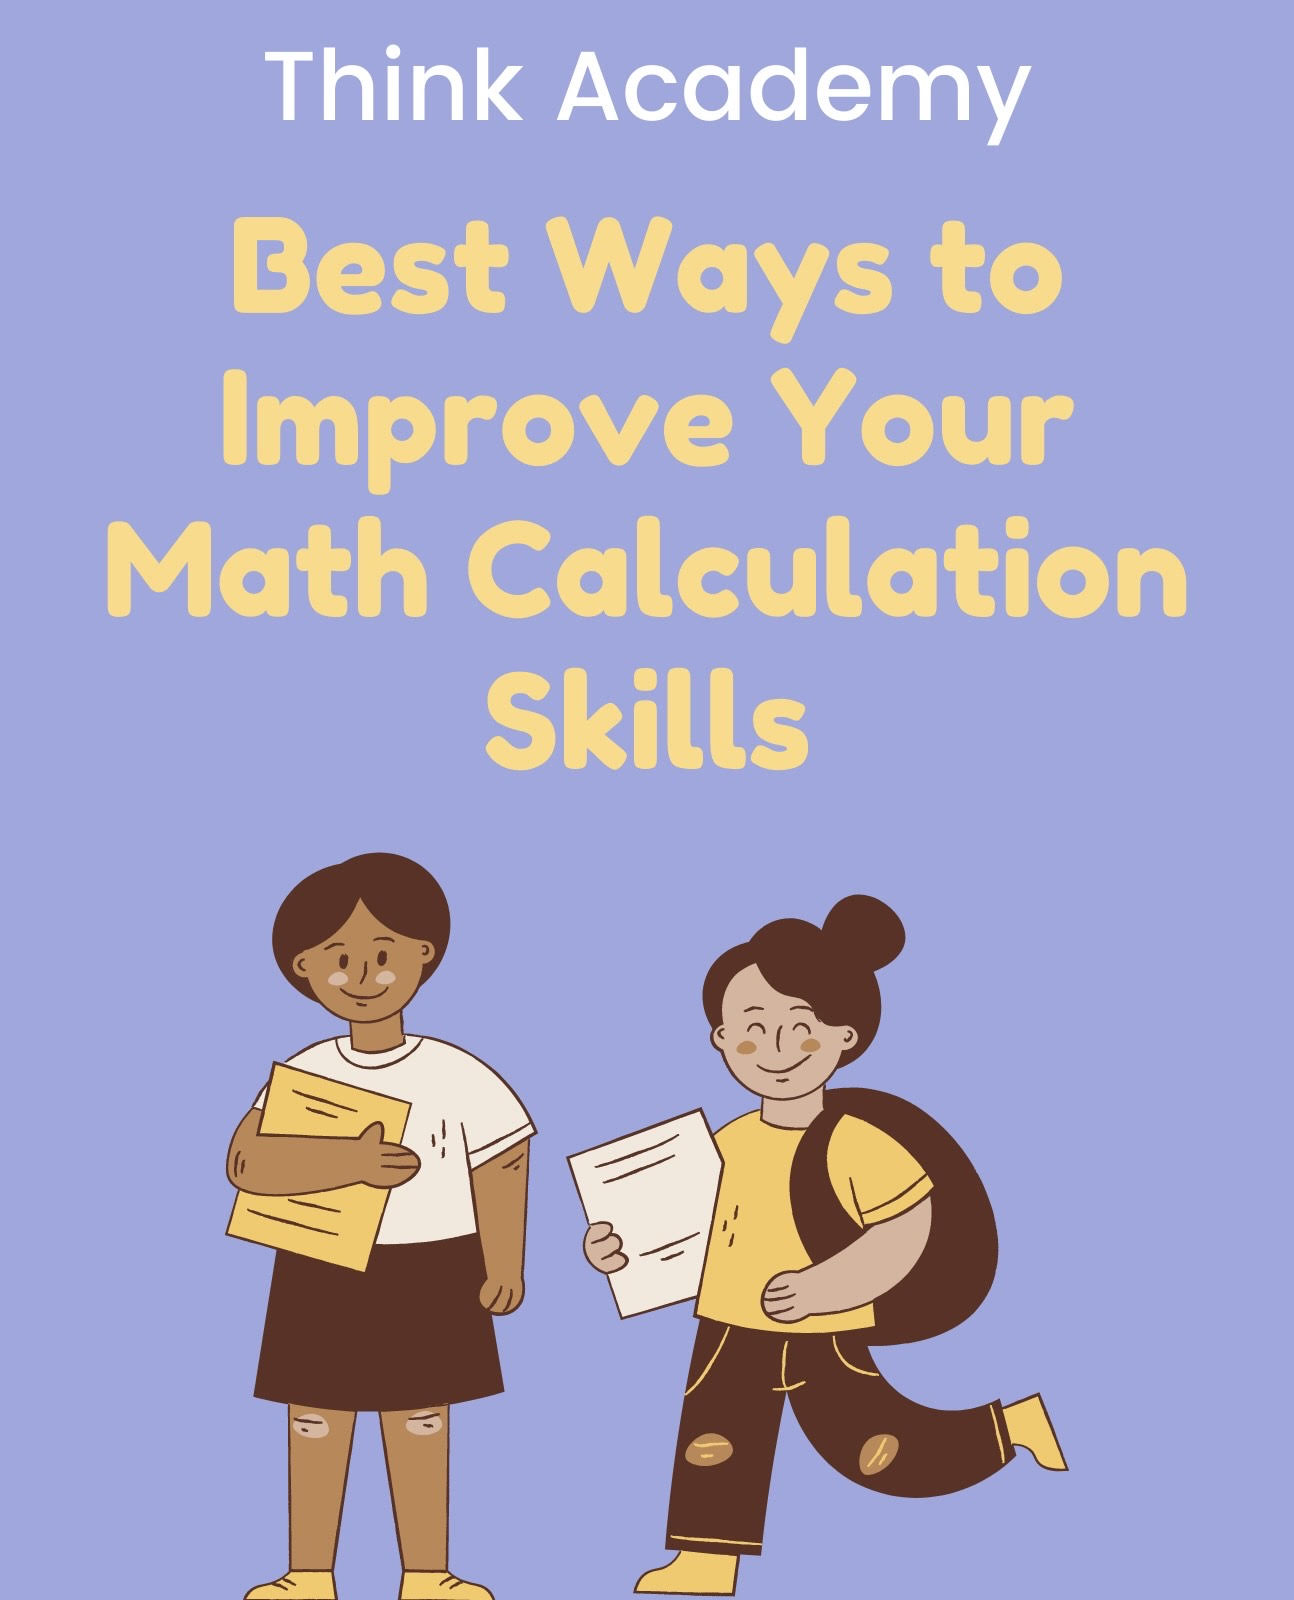 Math Computation: How to Develop Math Computation Skills in Your Child